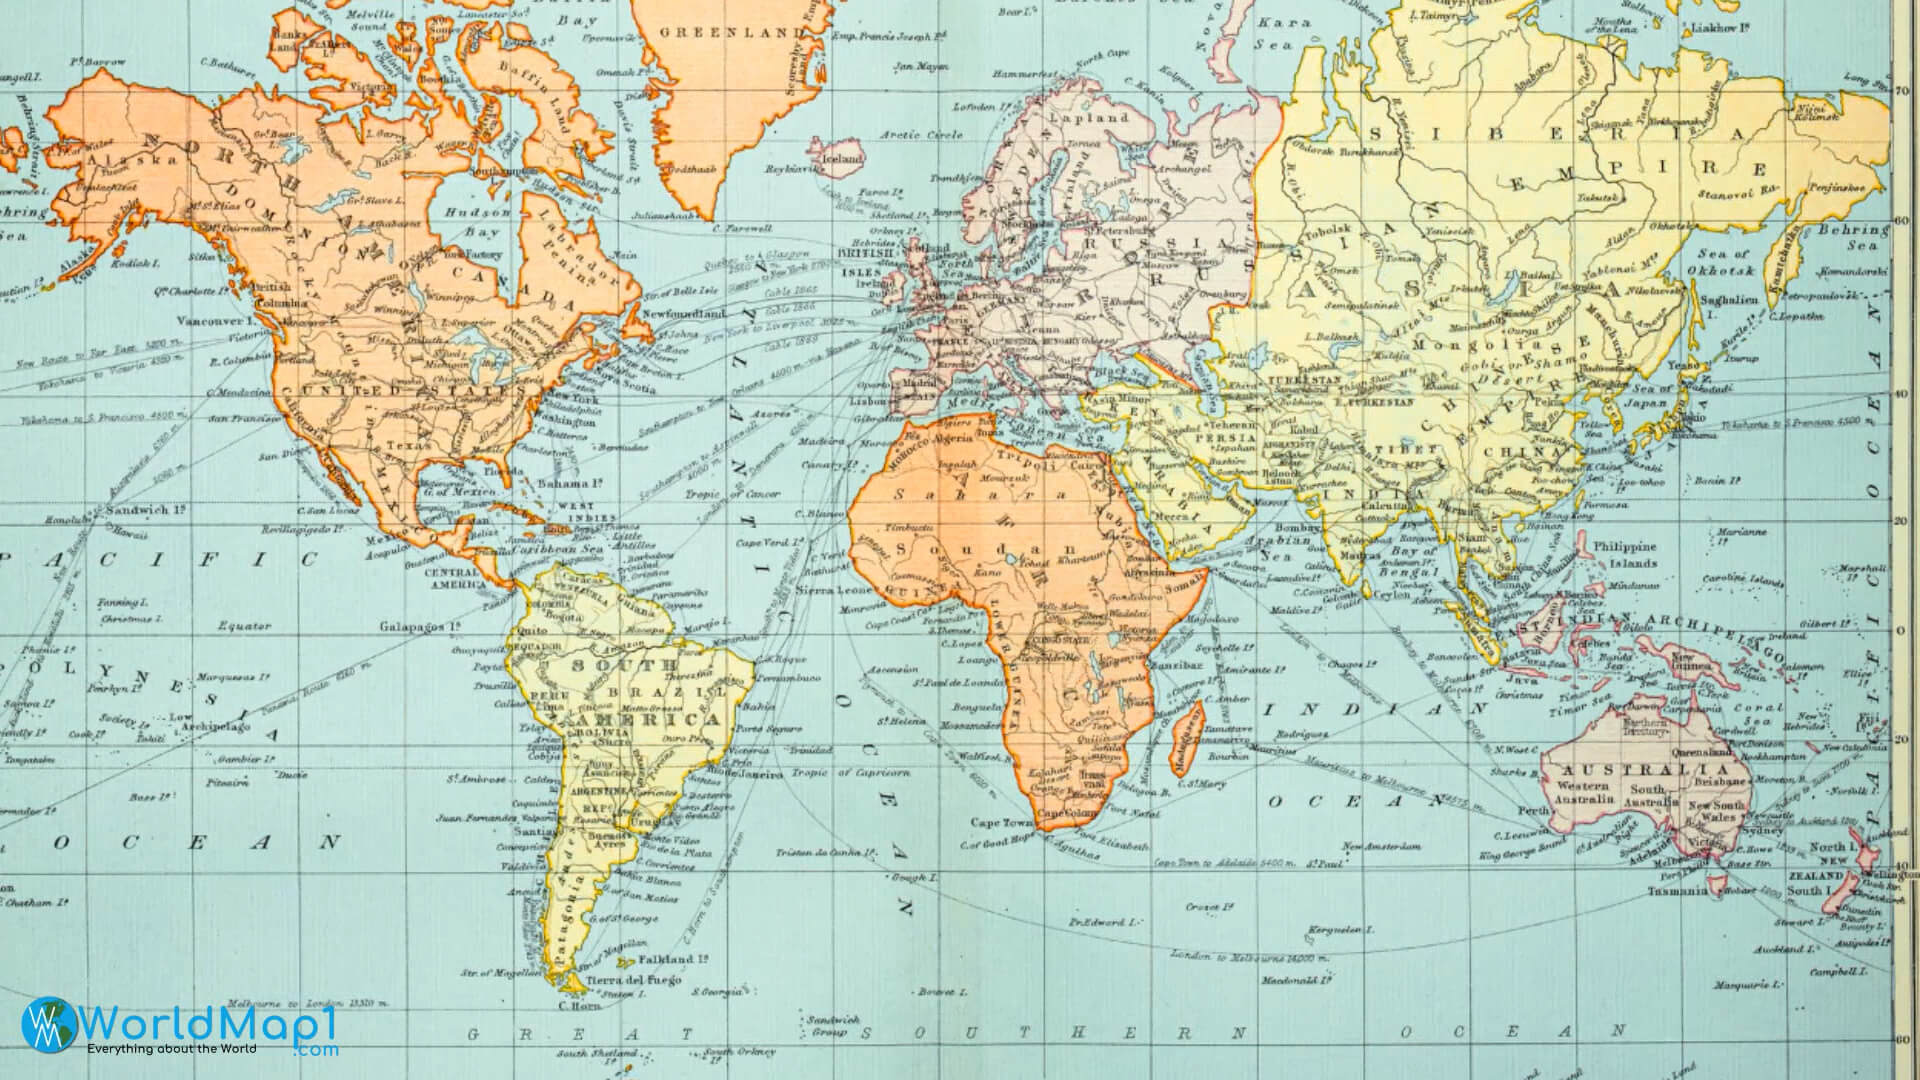 Oceania on World Map